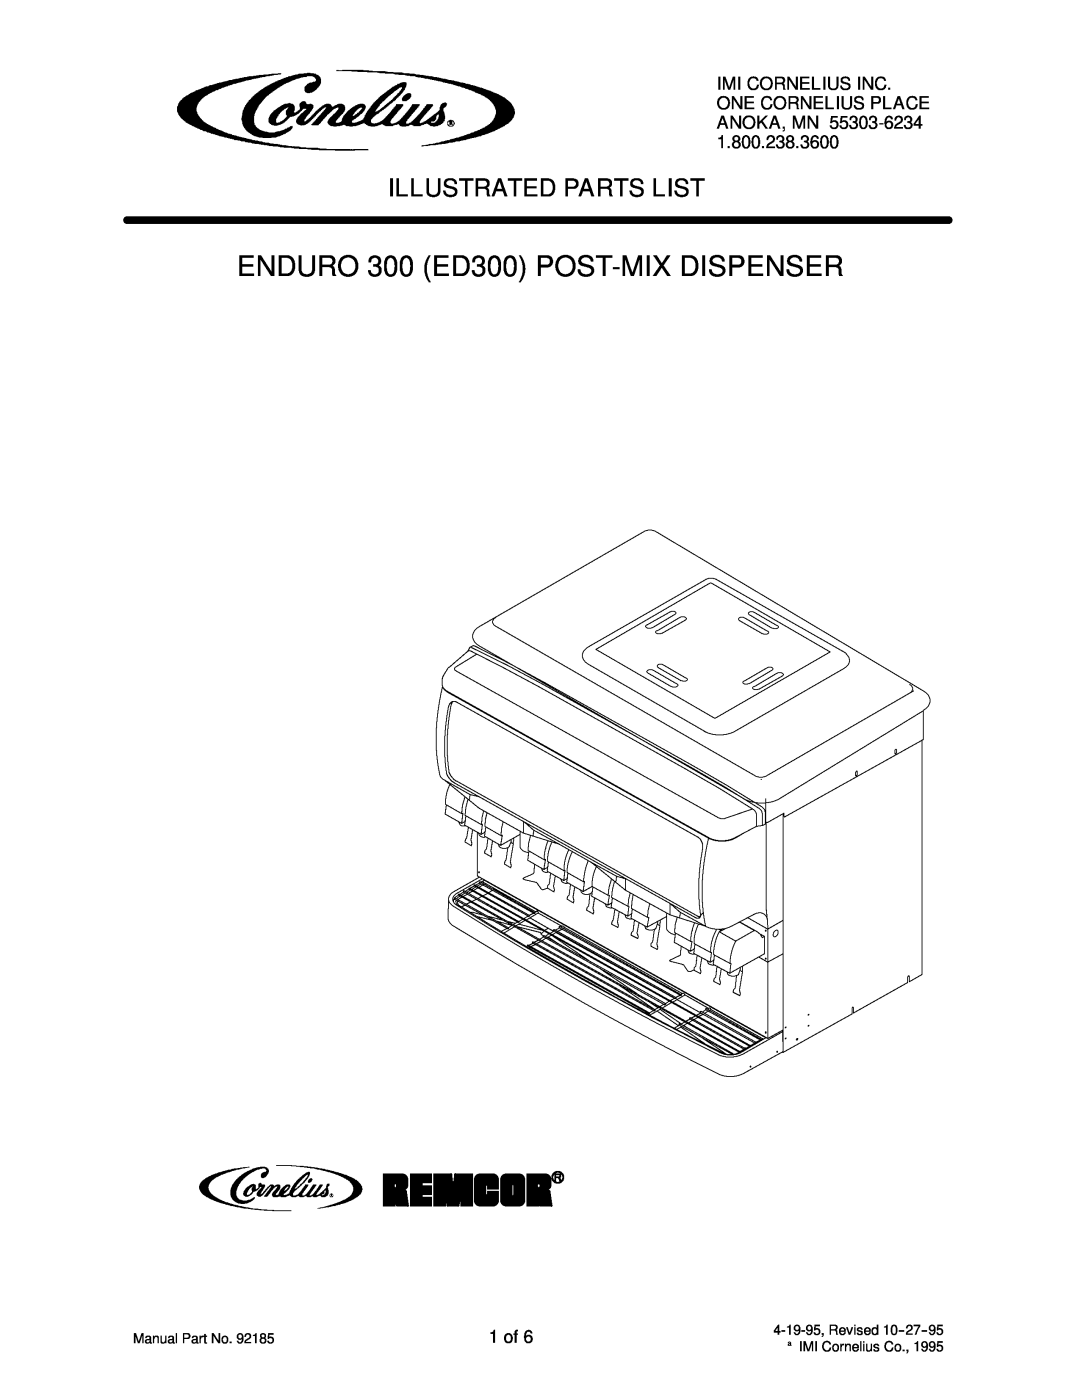 Cornelius ENDURO 300 (ED300) manual ENDURO 300 ED300 POST-MIXDISPENSER, Illustrated Parts List, 1 of 